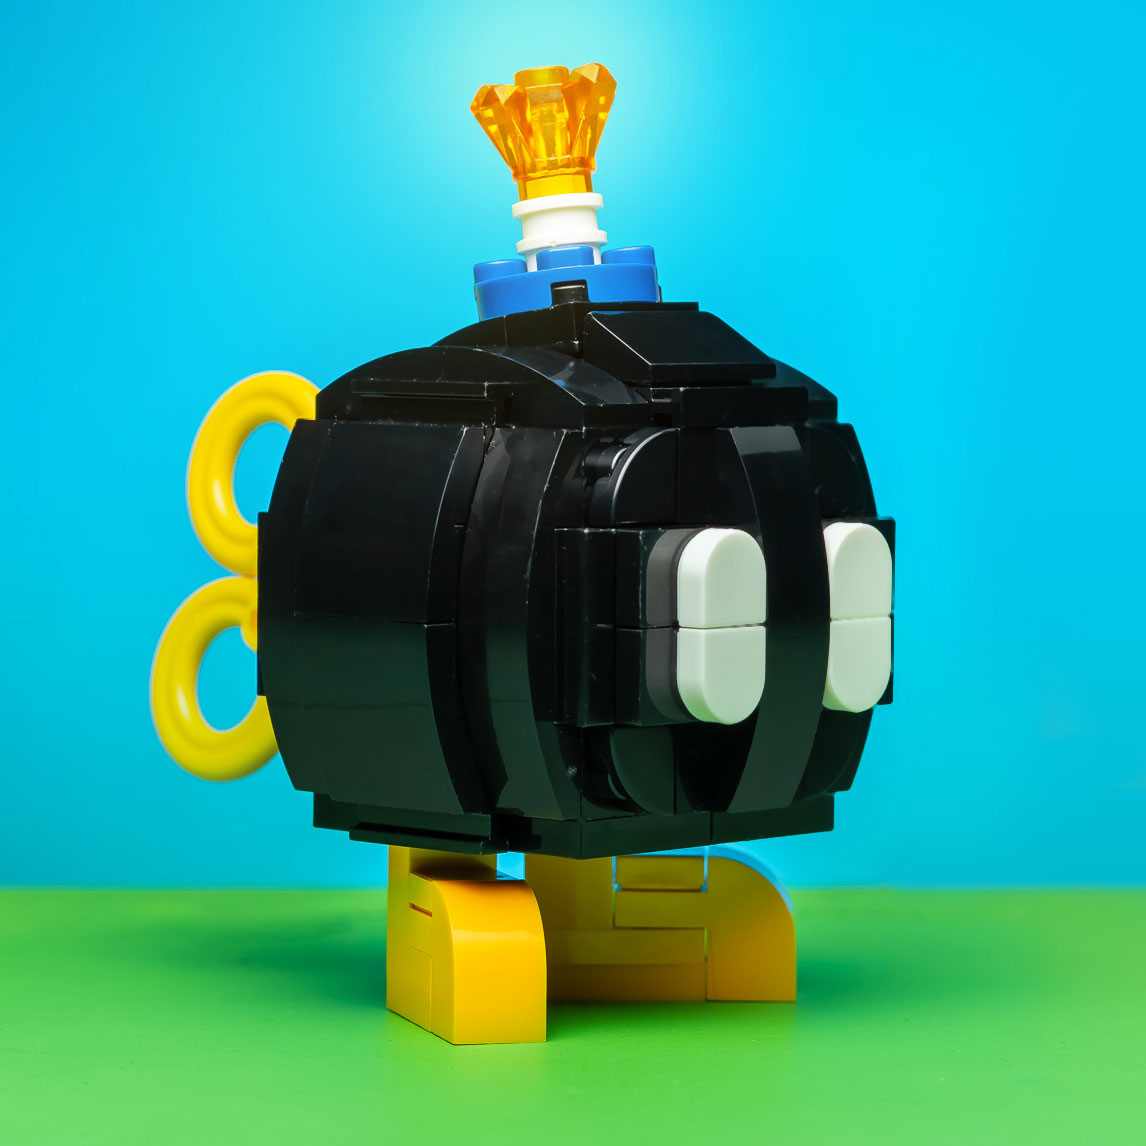 Bomber Man made using LEGO parts - B3 Customs